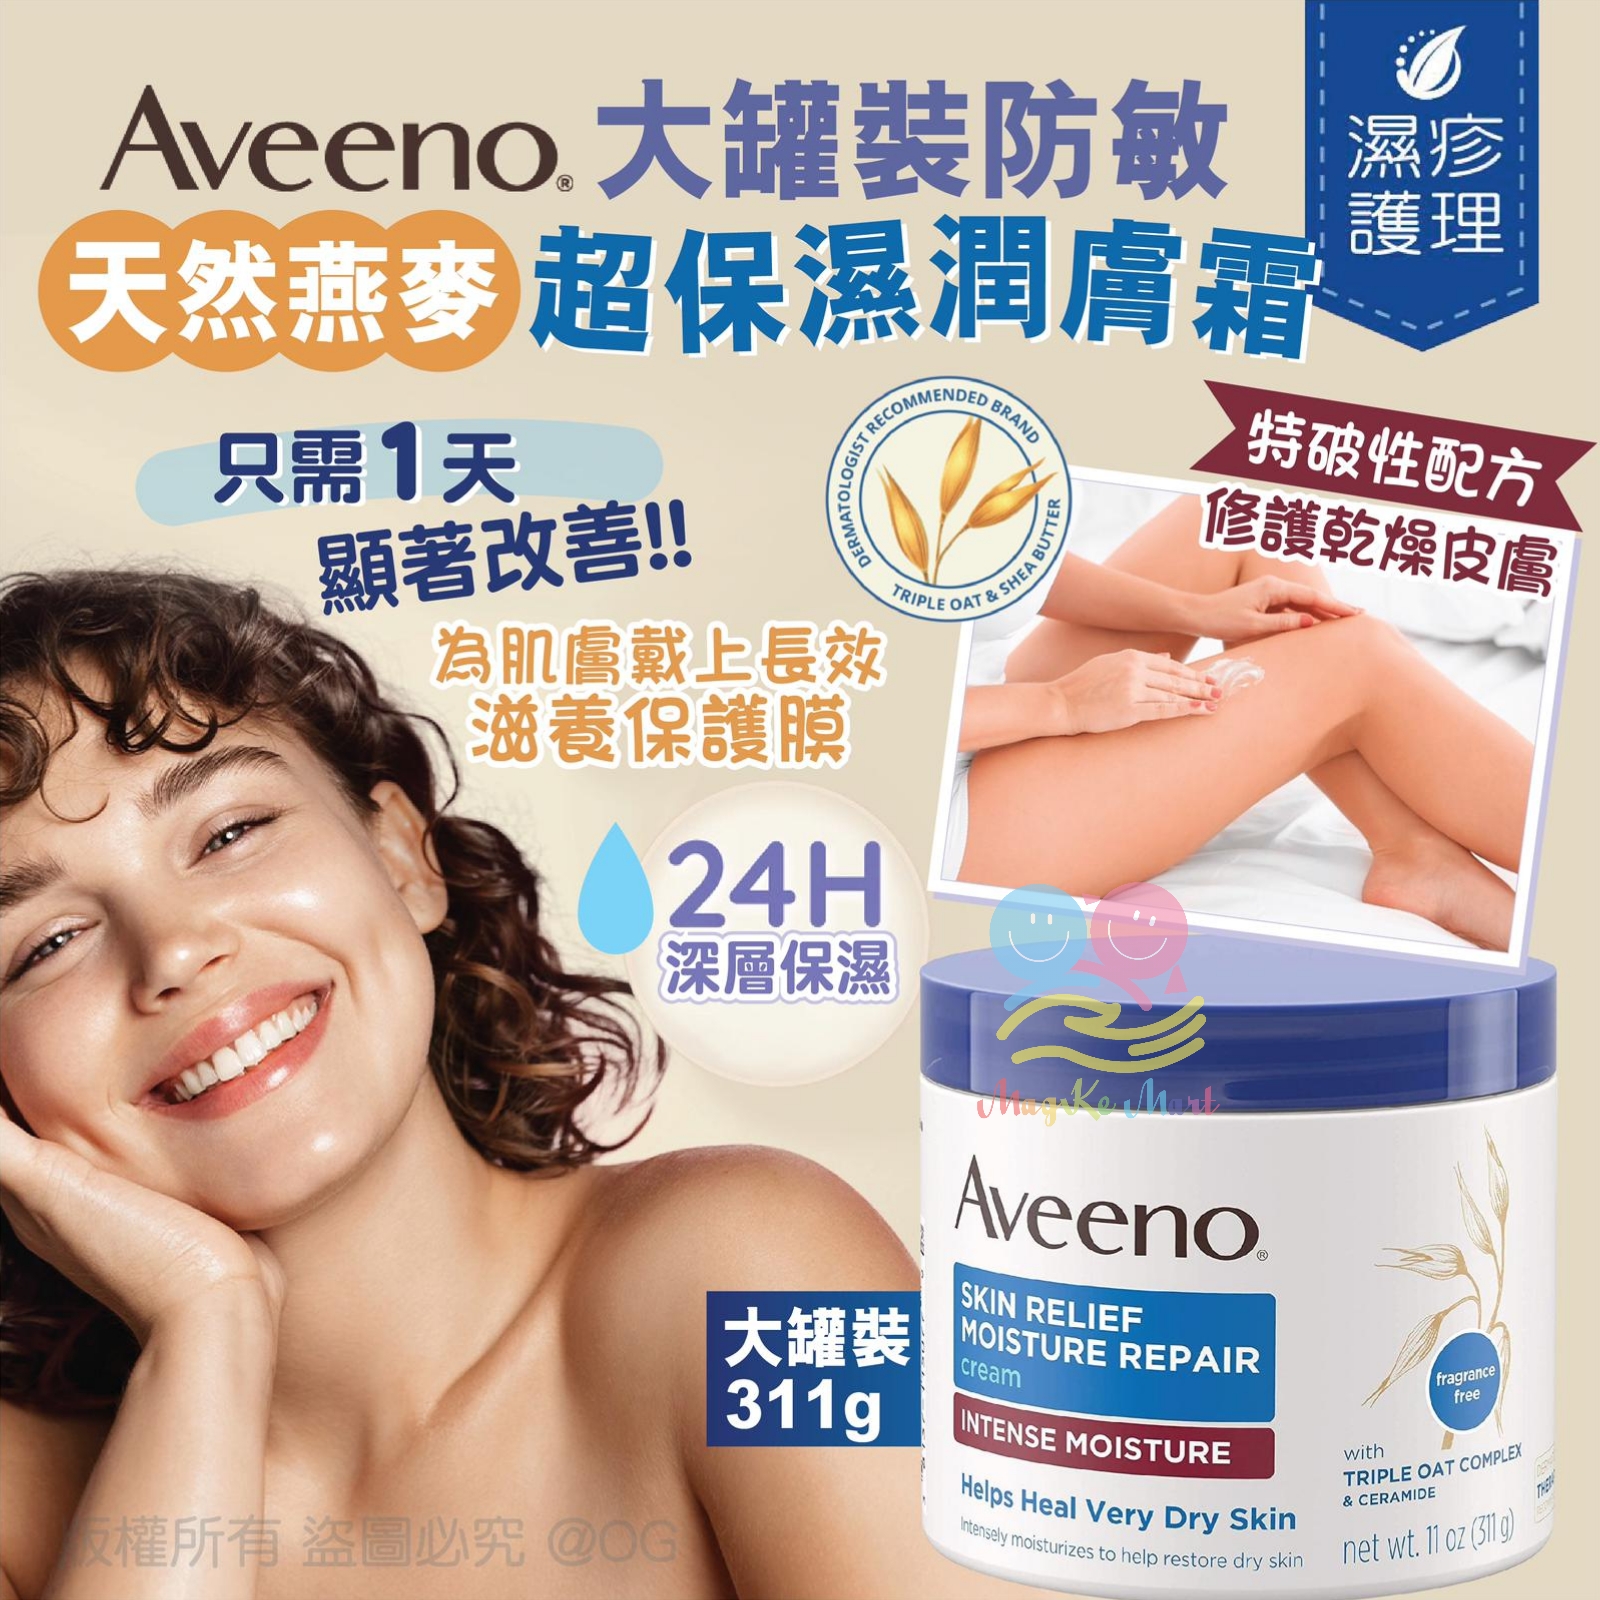 Aveeno 大罐裝防敏天然燕麥超保濕潤膚霜 311g